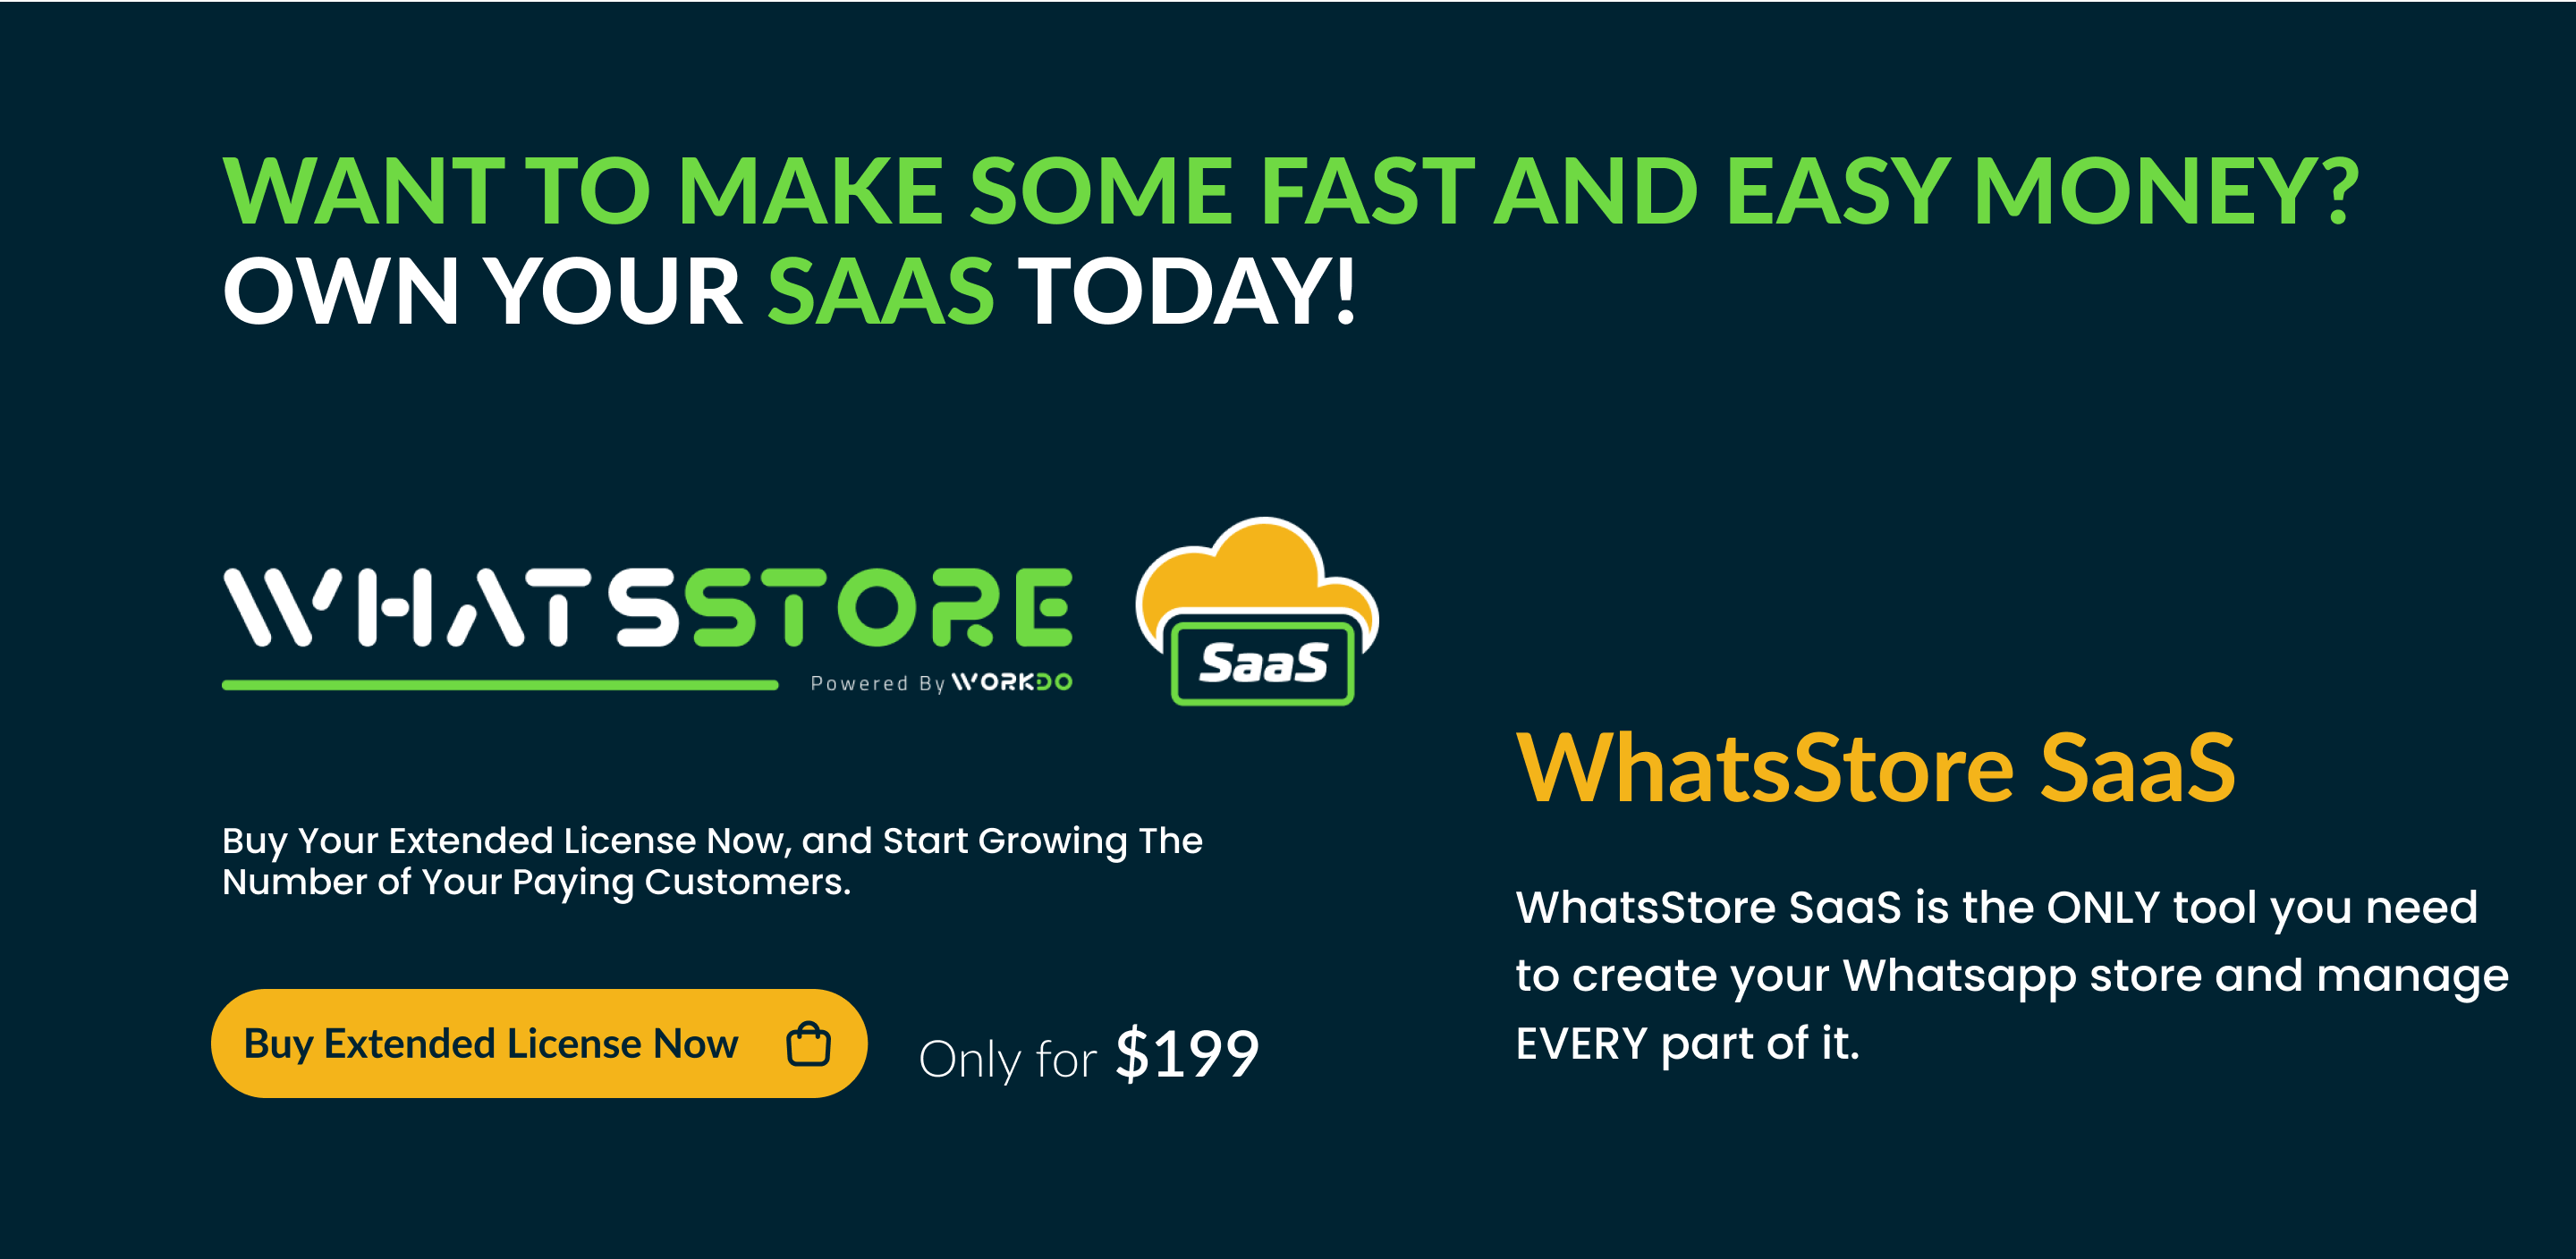 WhatsStore SaaS - Online WhatsApp Store Builder - 11